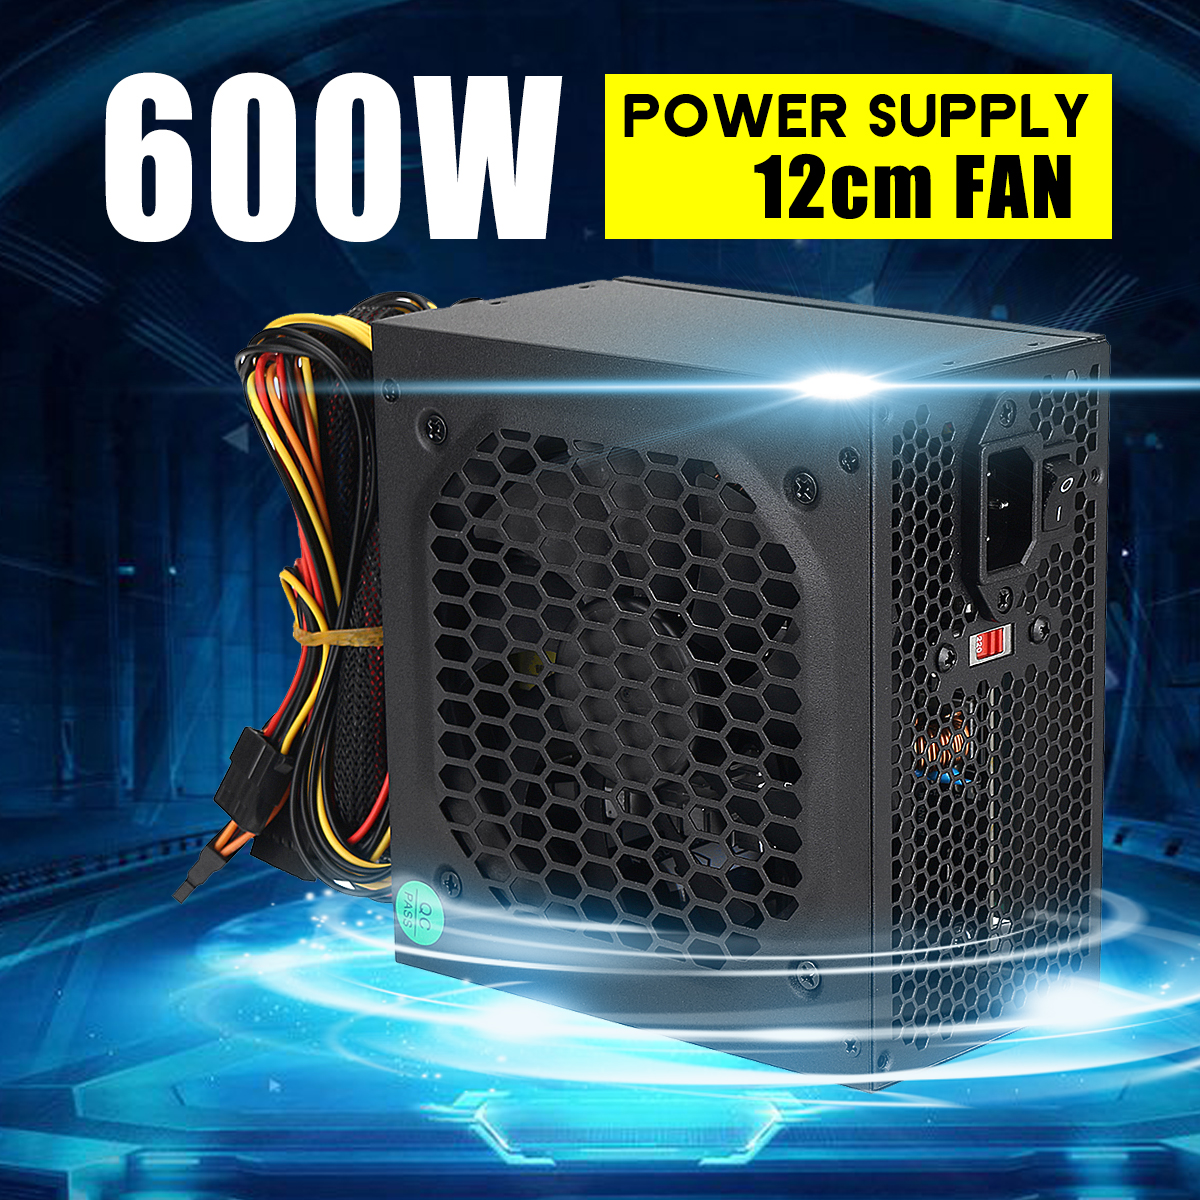 600W-Power-Supply-12cm-Fan-8-Pin-PCI-SATA-12V-Computer-Power-Supply-1656481-1